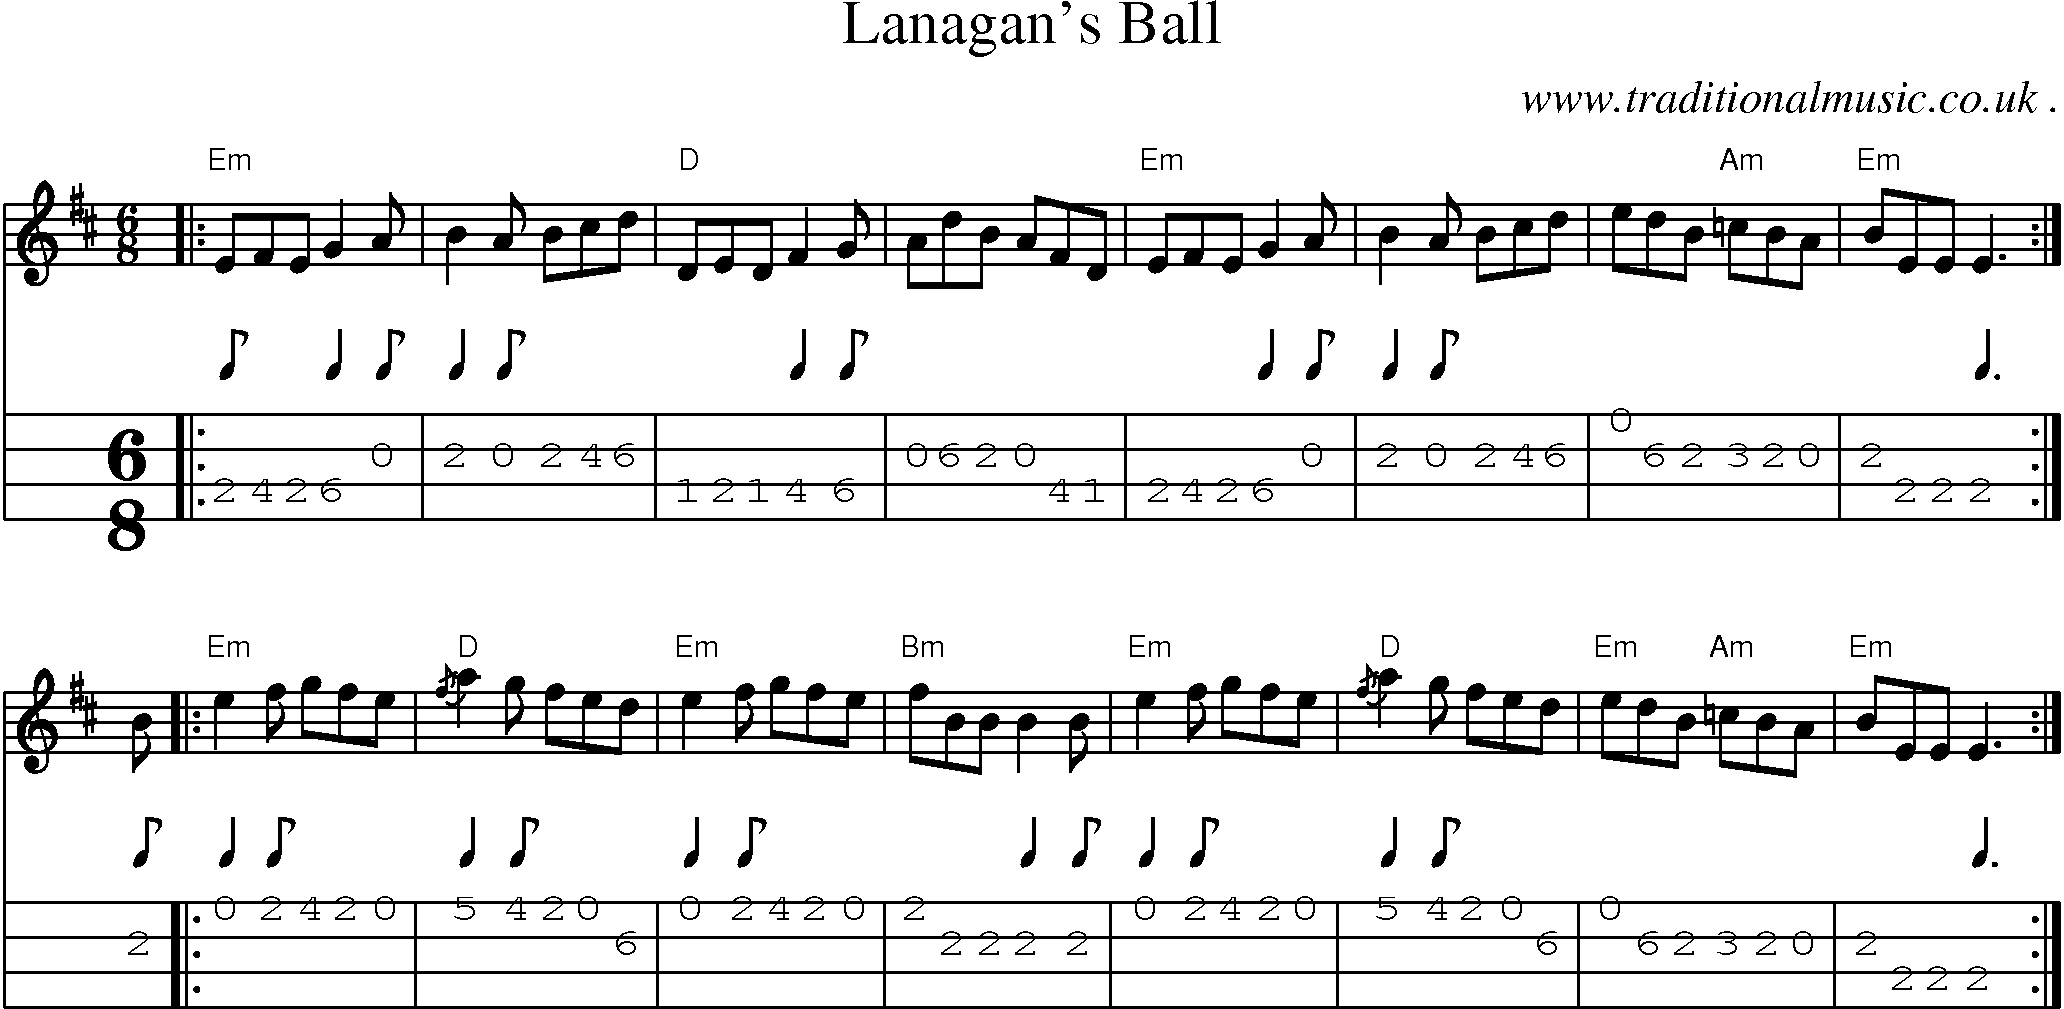 Sheet-music  score, Chords and Mandolin Tabs for Lanagans Ball